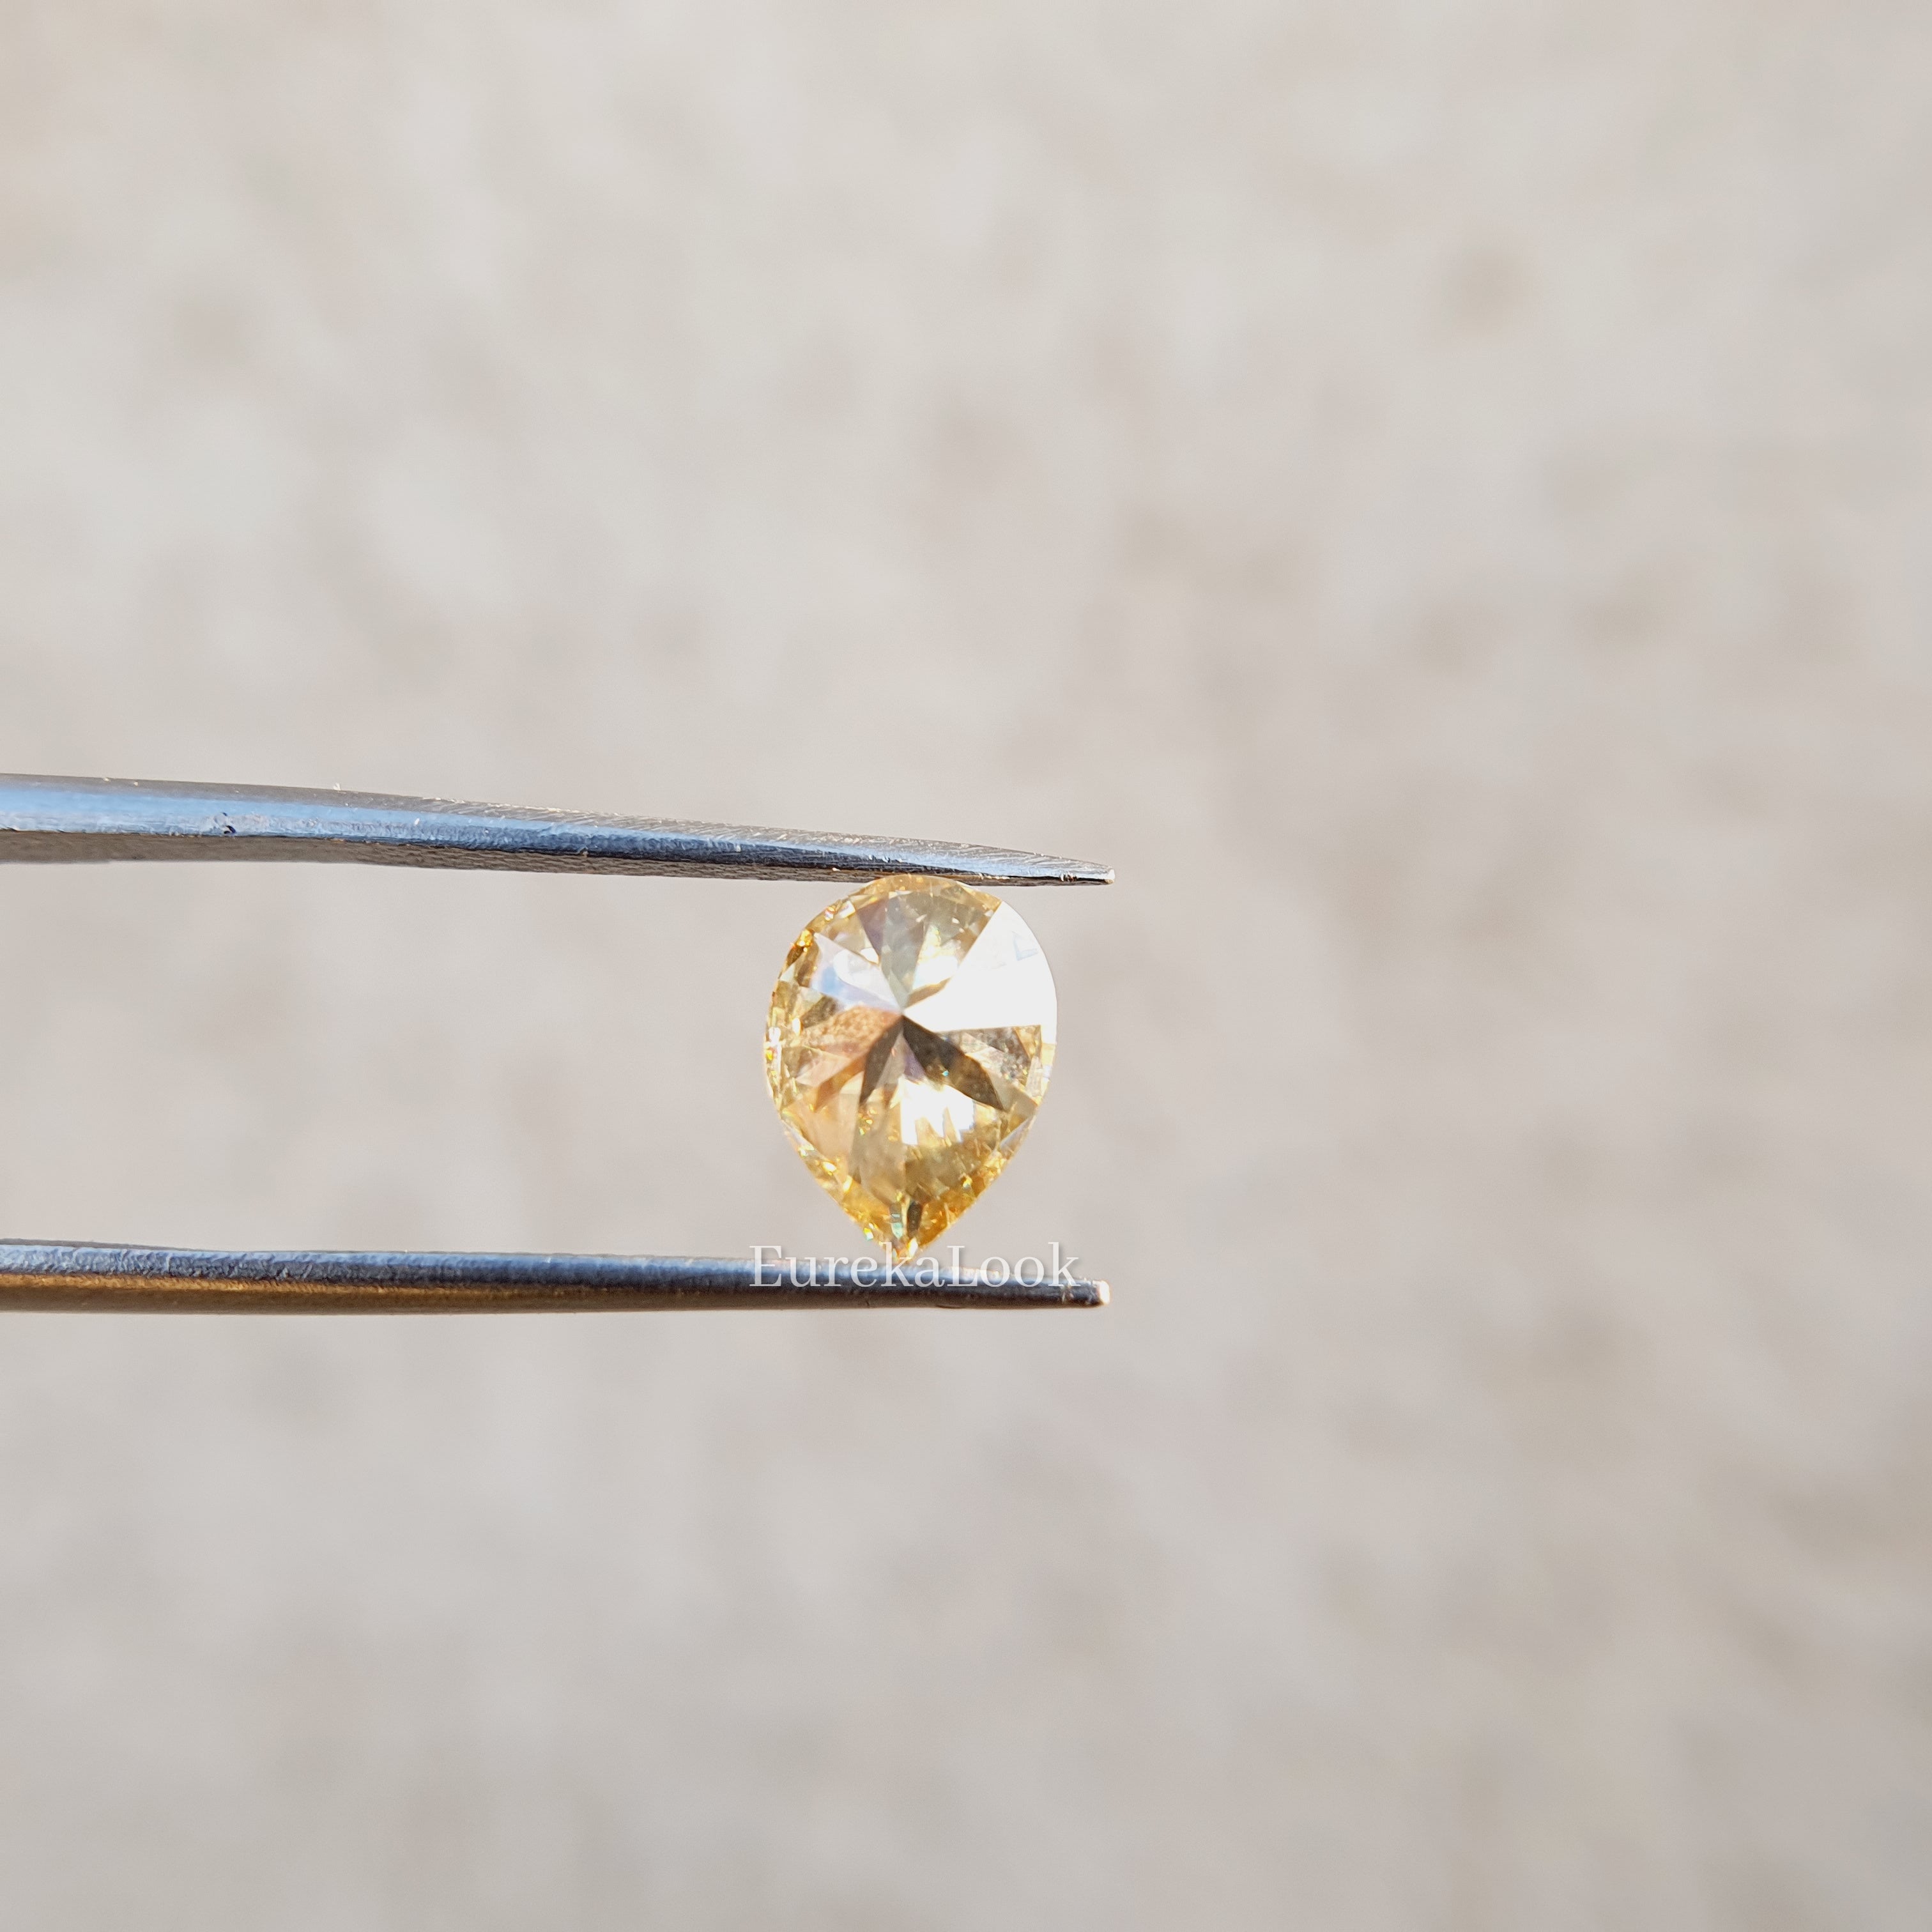 3.0CT Yellow Pear Cut Loose Moissanite Diamond - Eurekalook